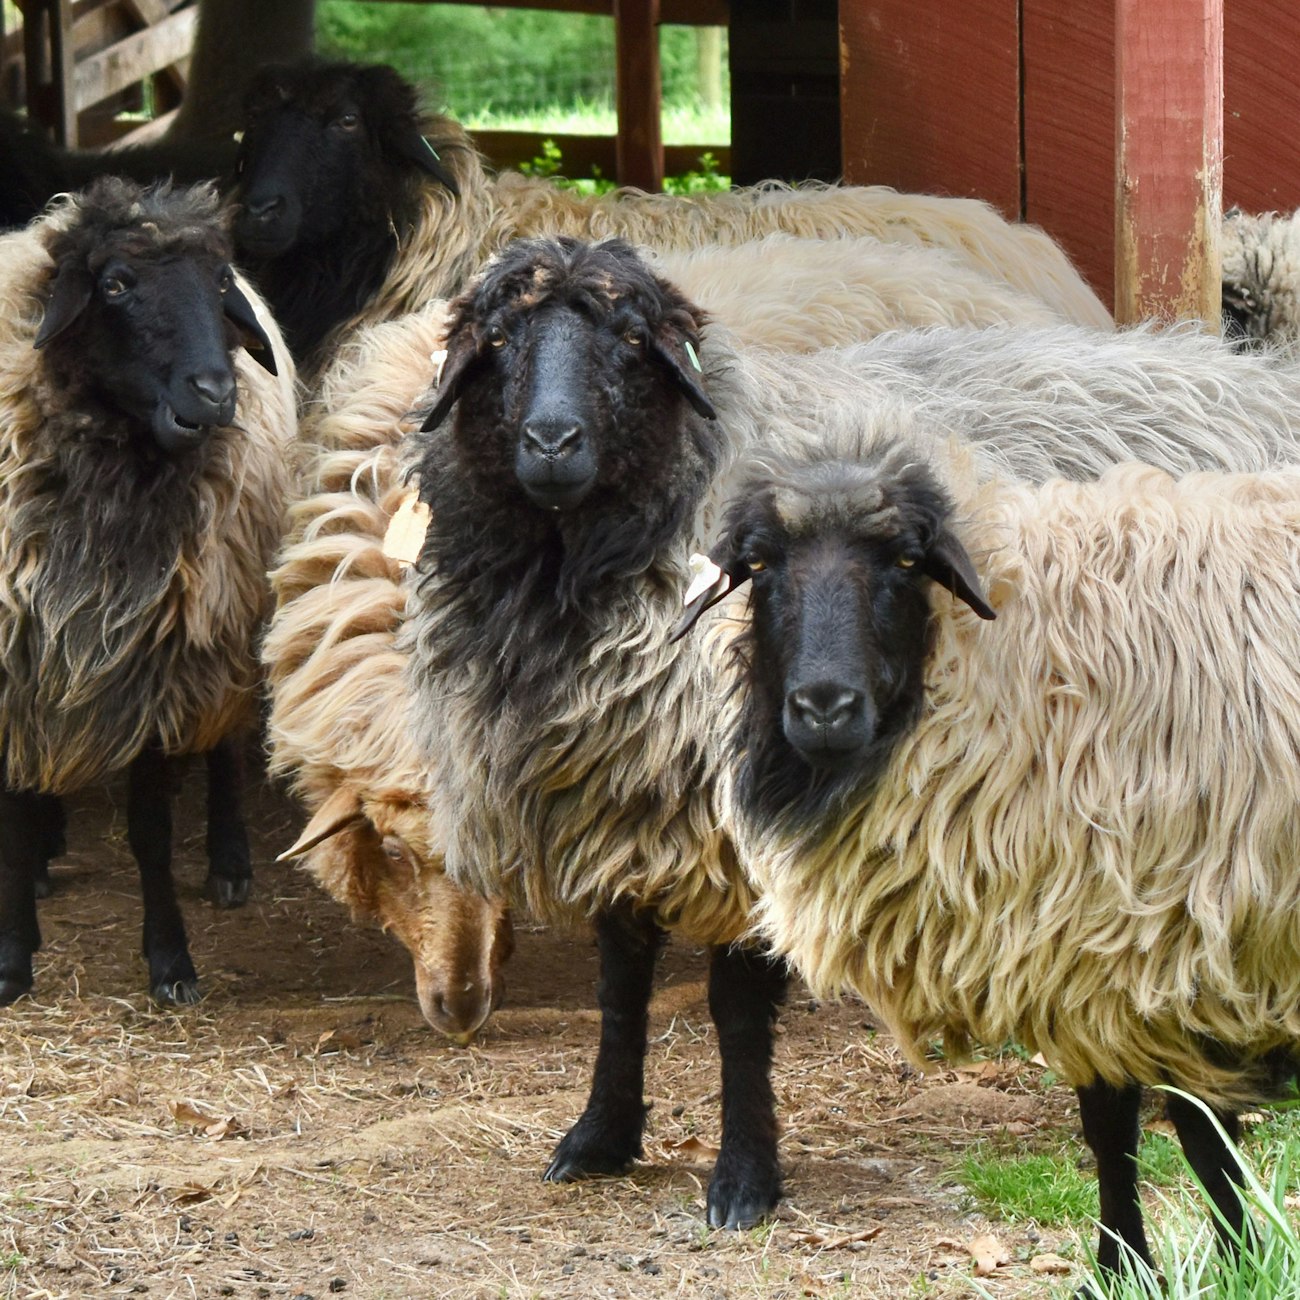 Four black-faced Karakul sheep look at camera